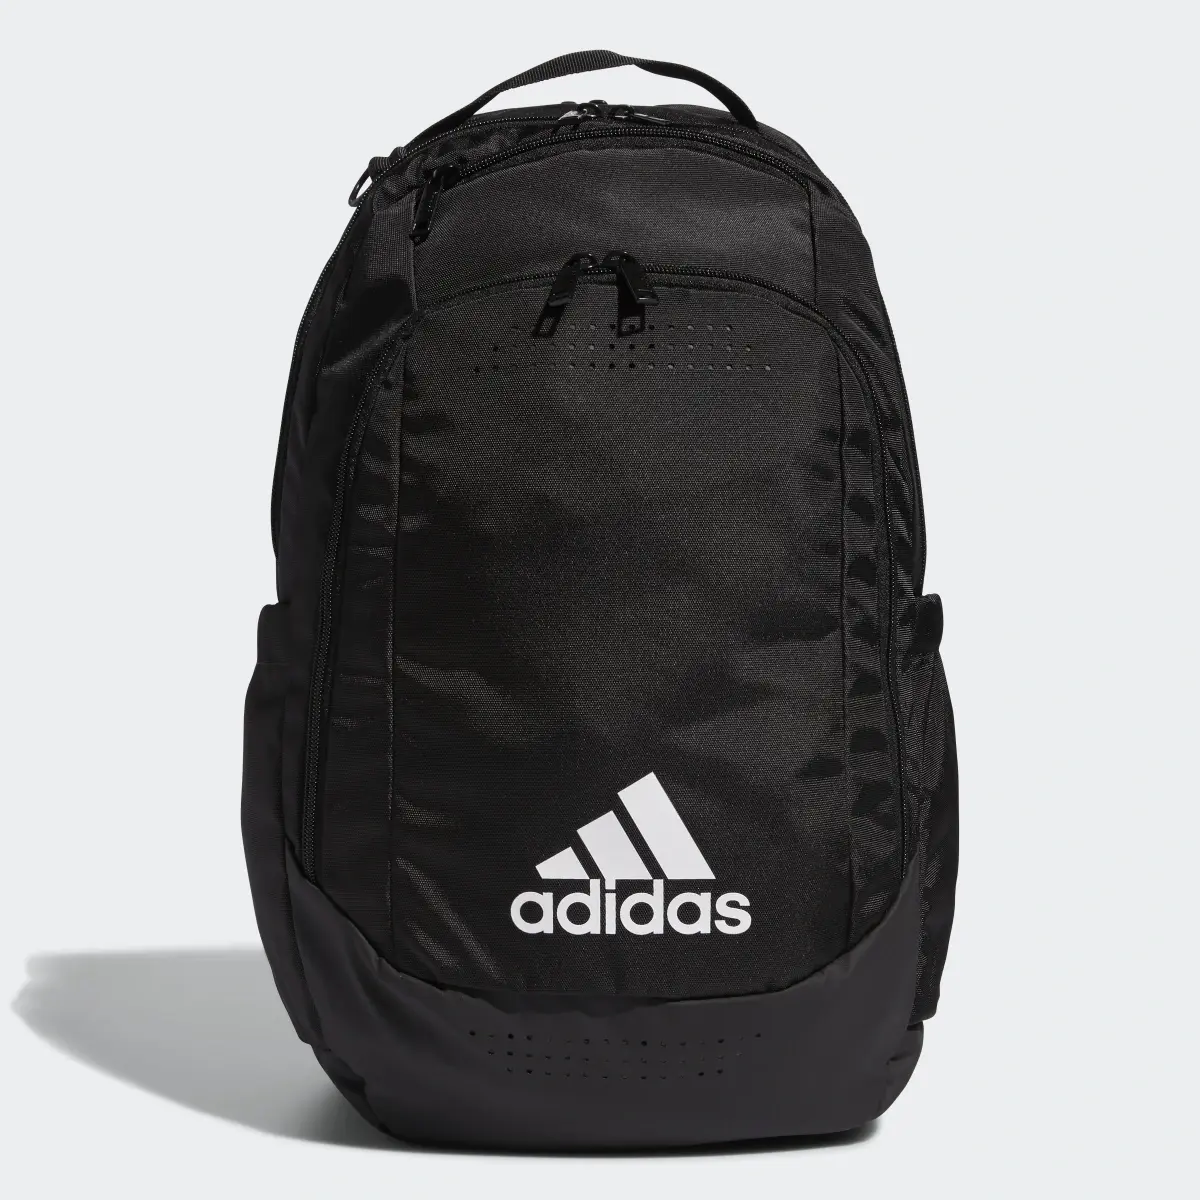 Adidas Defender Backpack. 1